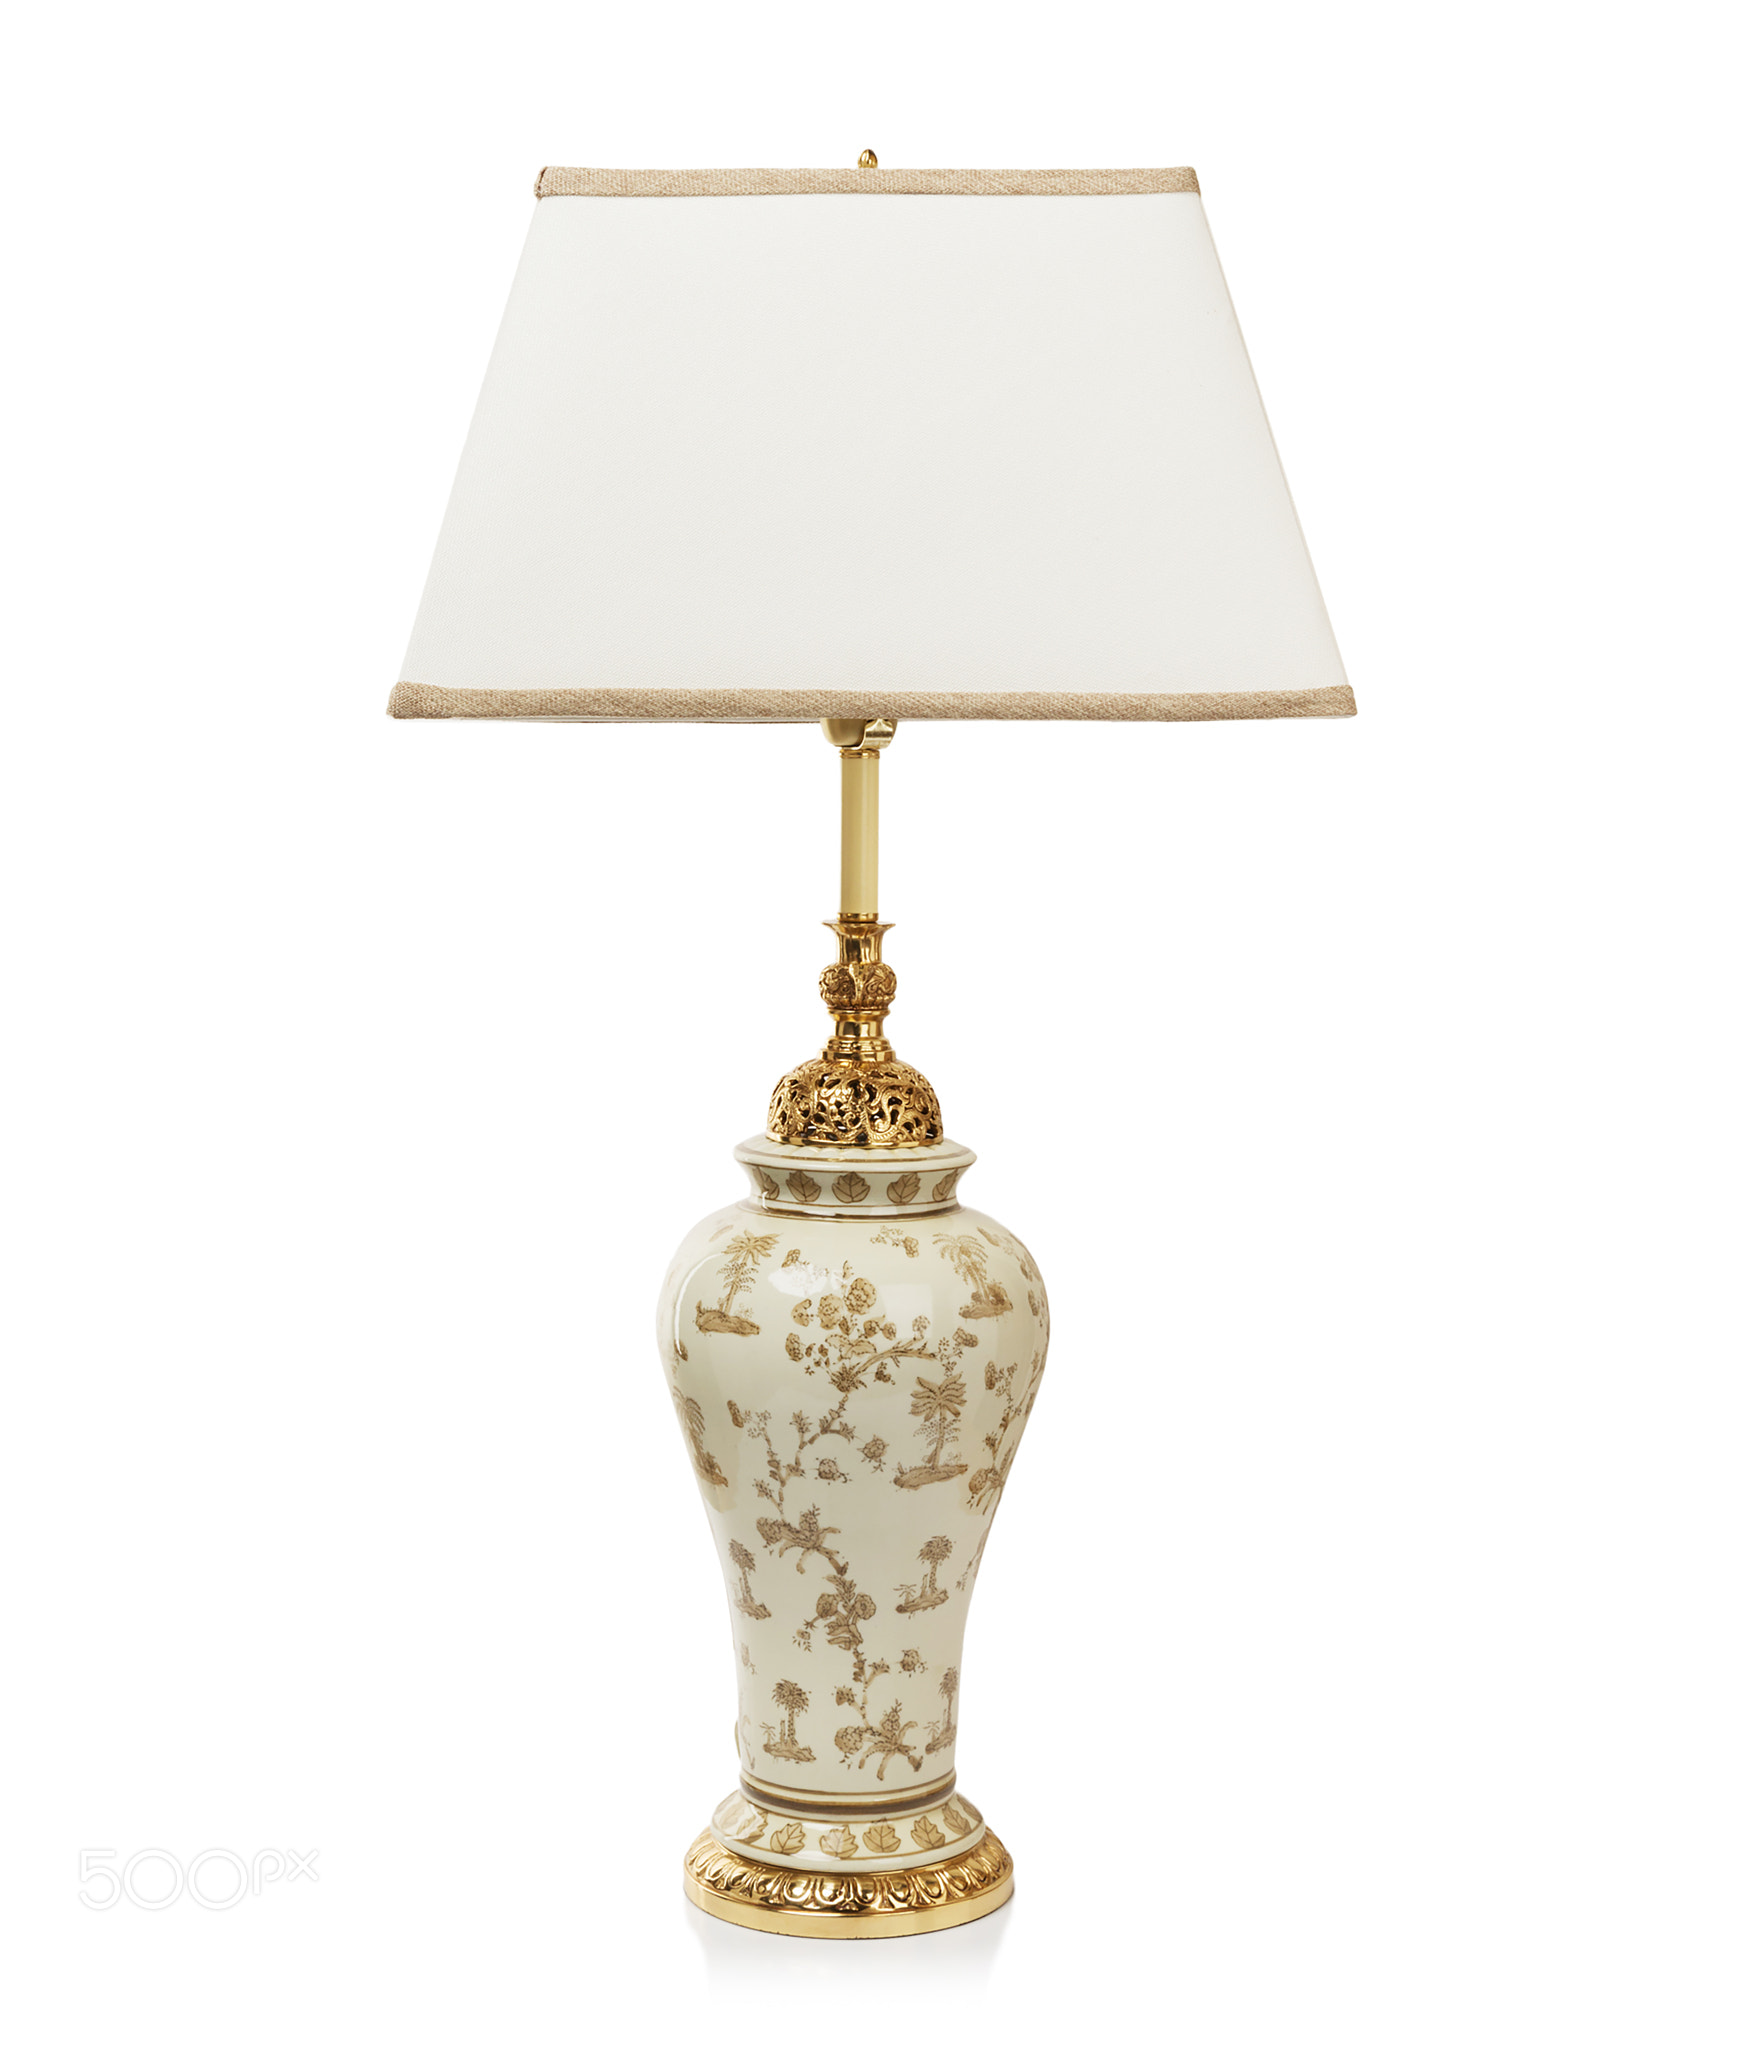 Modern luxury table lamp